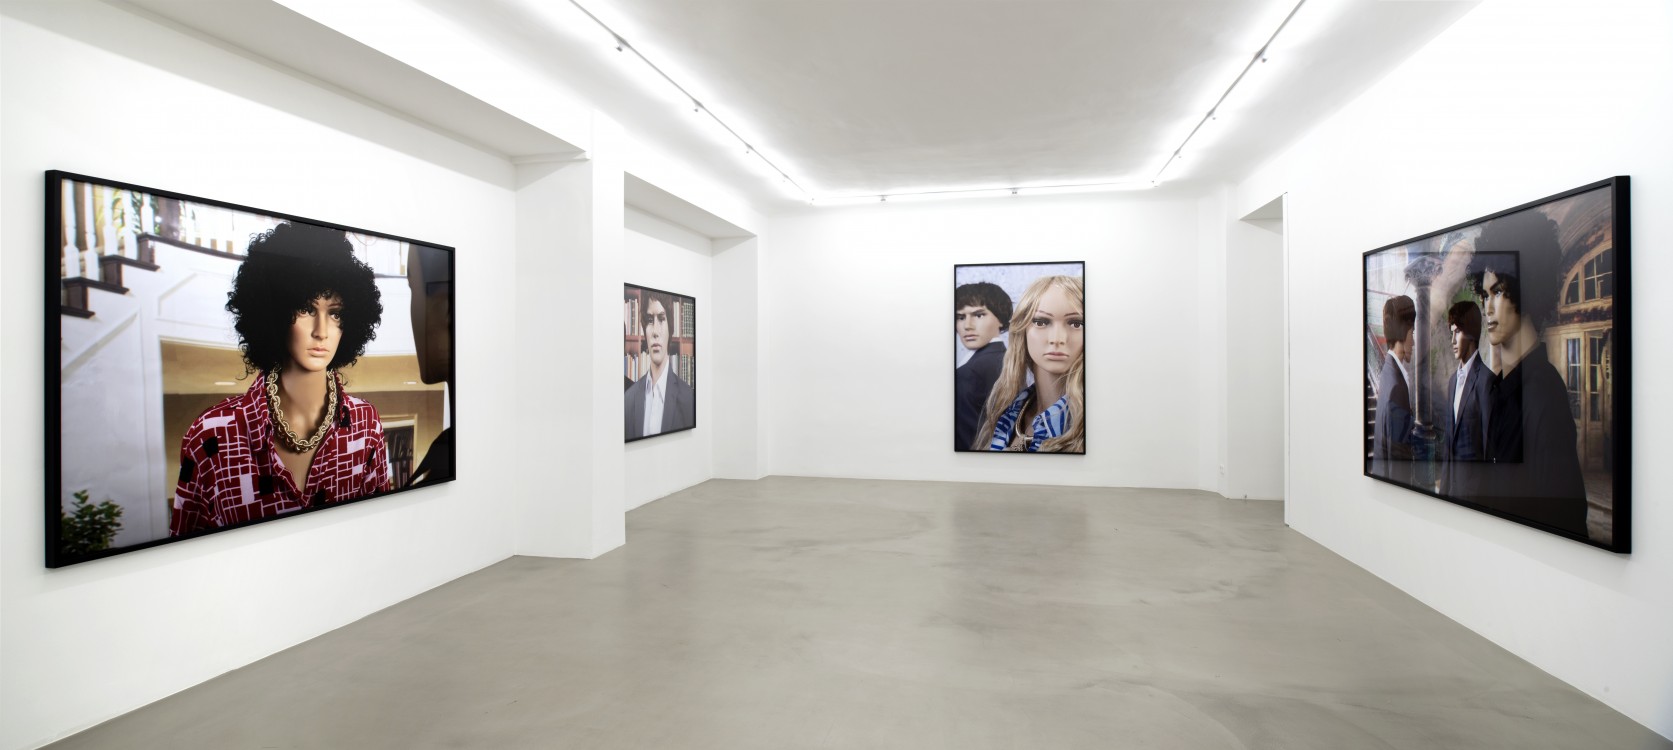 Other Subjectivities Meyer Riegger Galerie, 2019